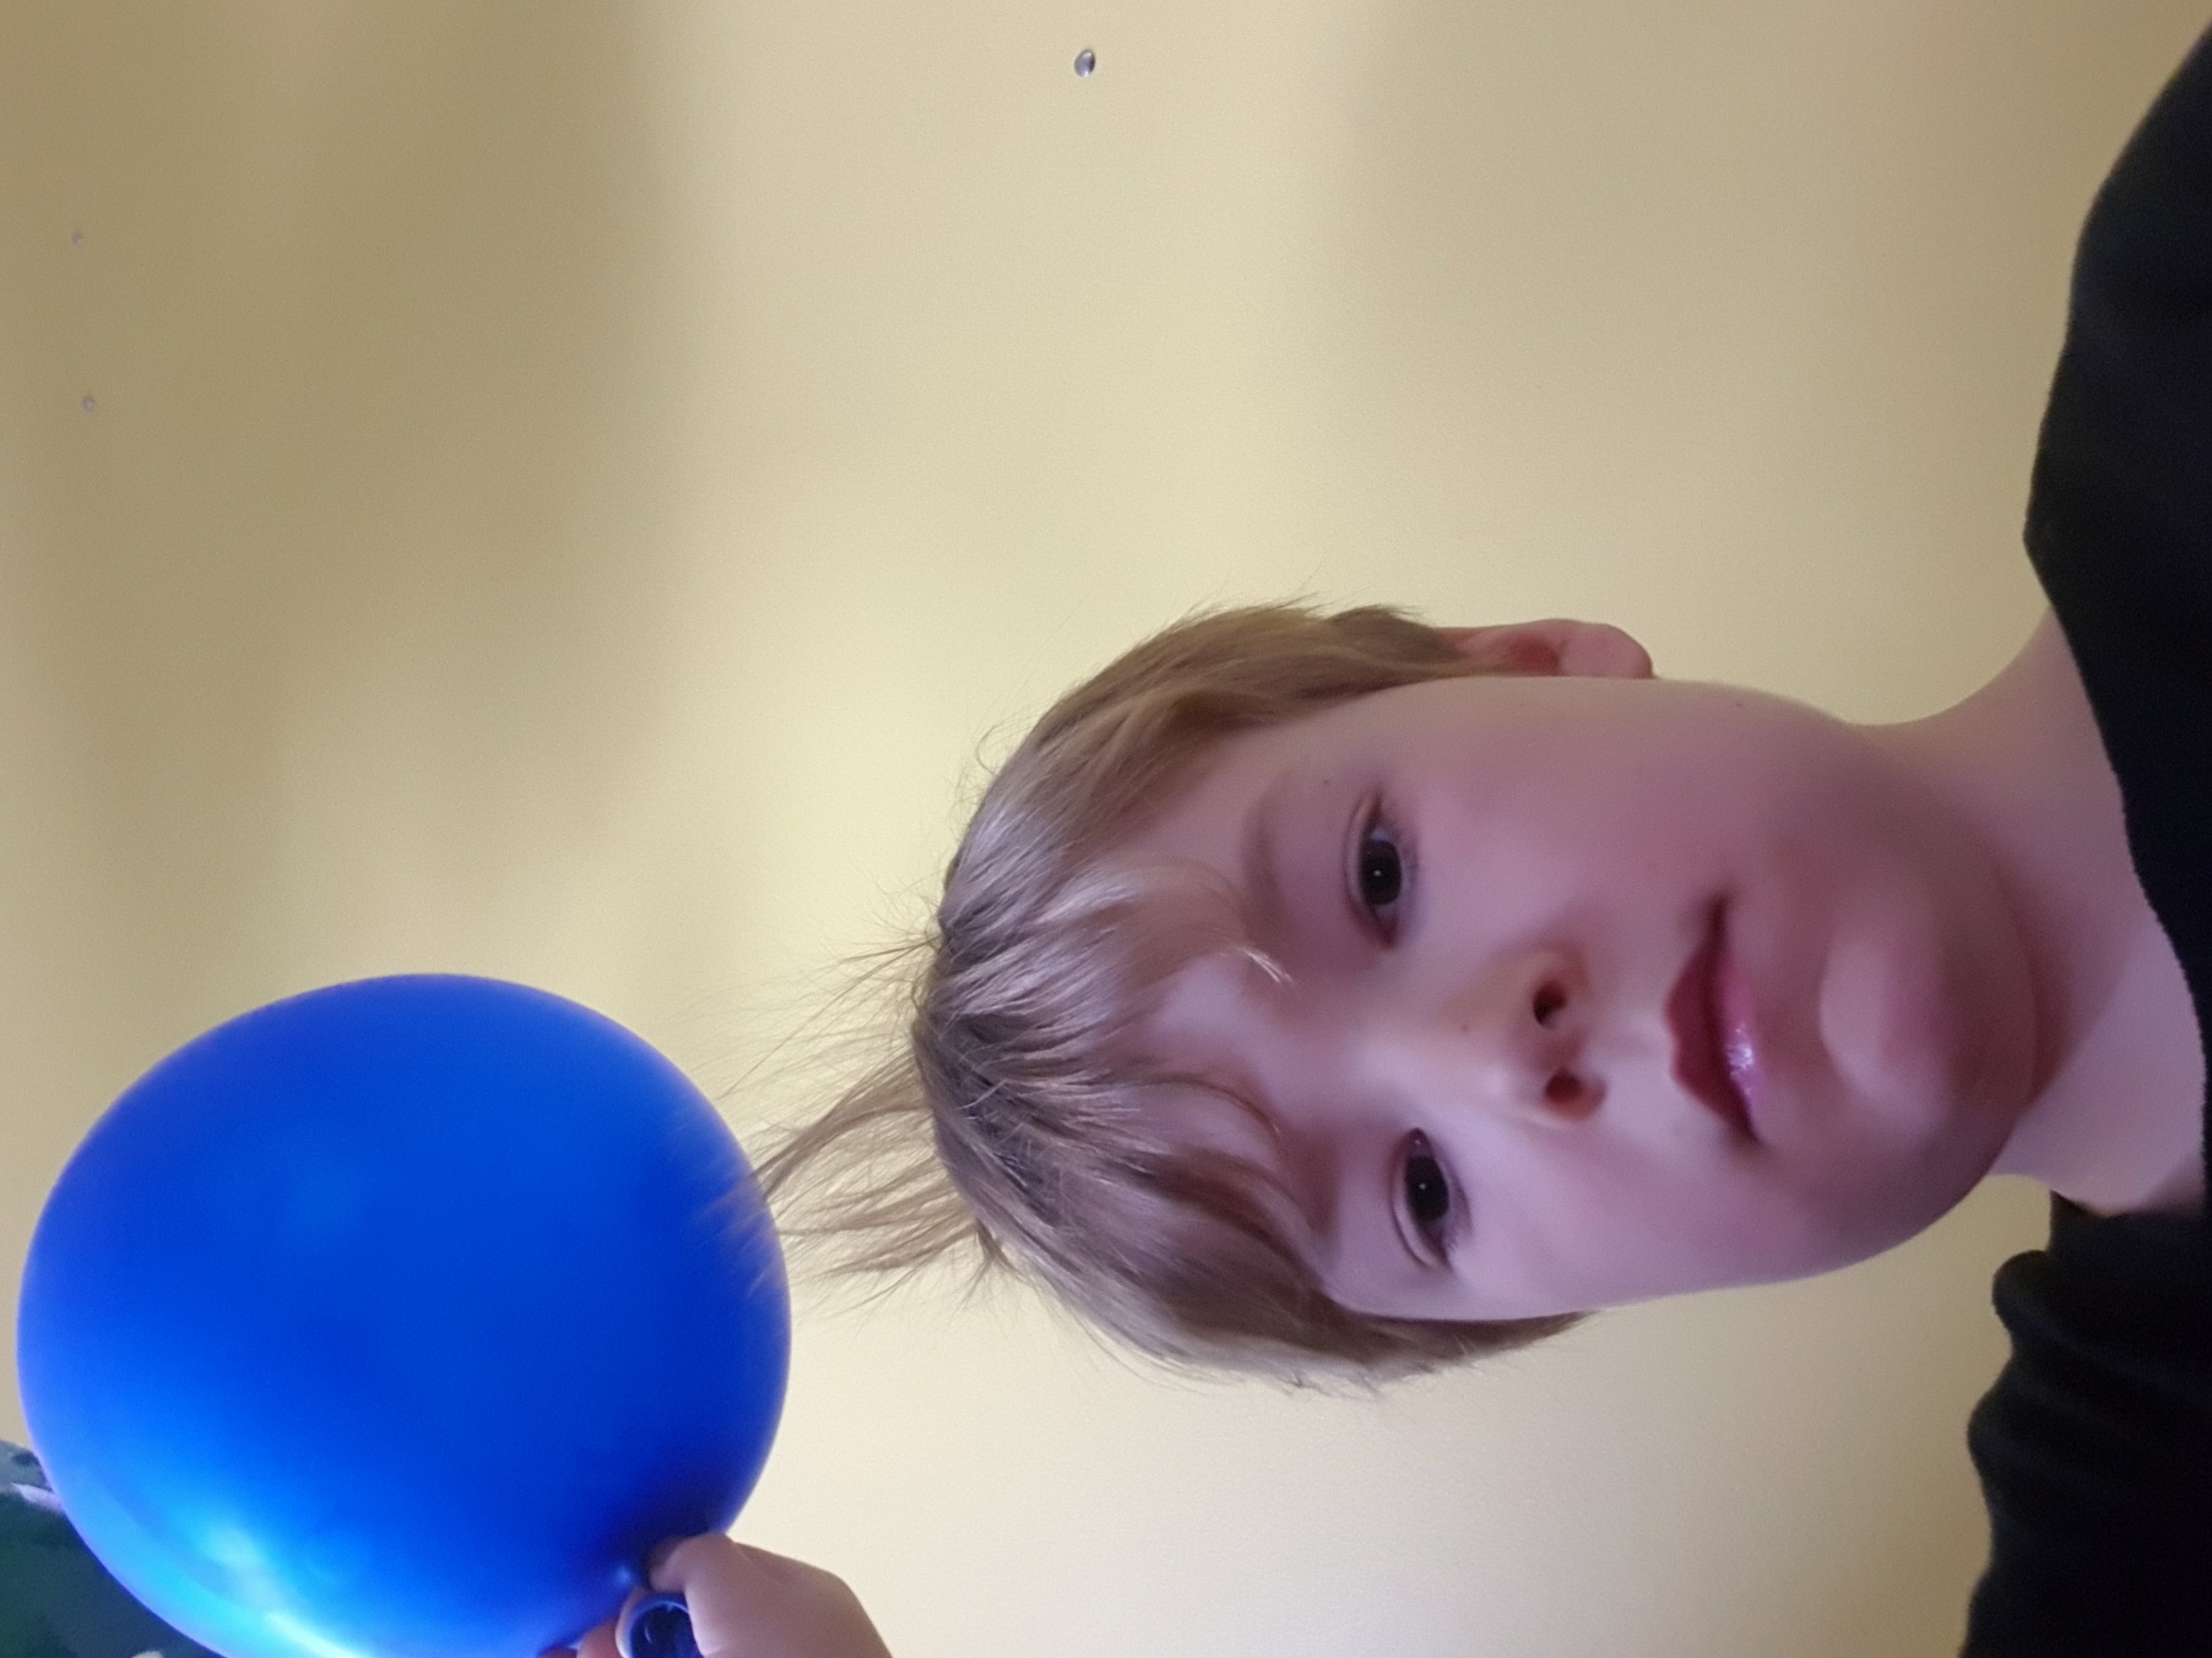 High Quality Ballon making hair stand up Blank Meme Template